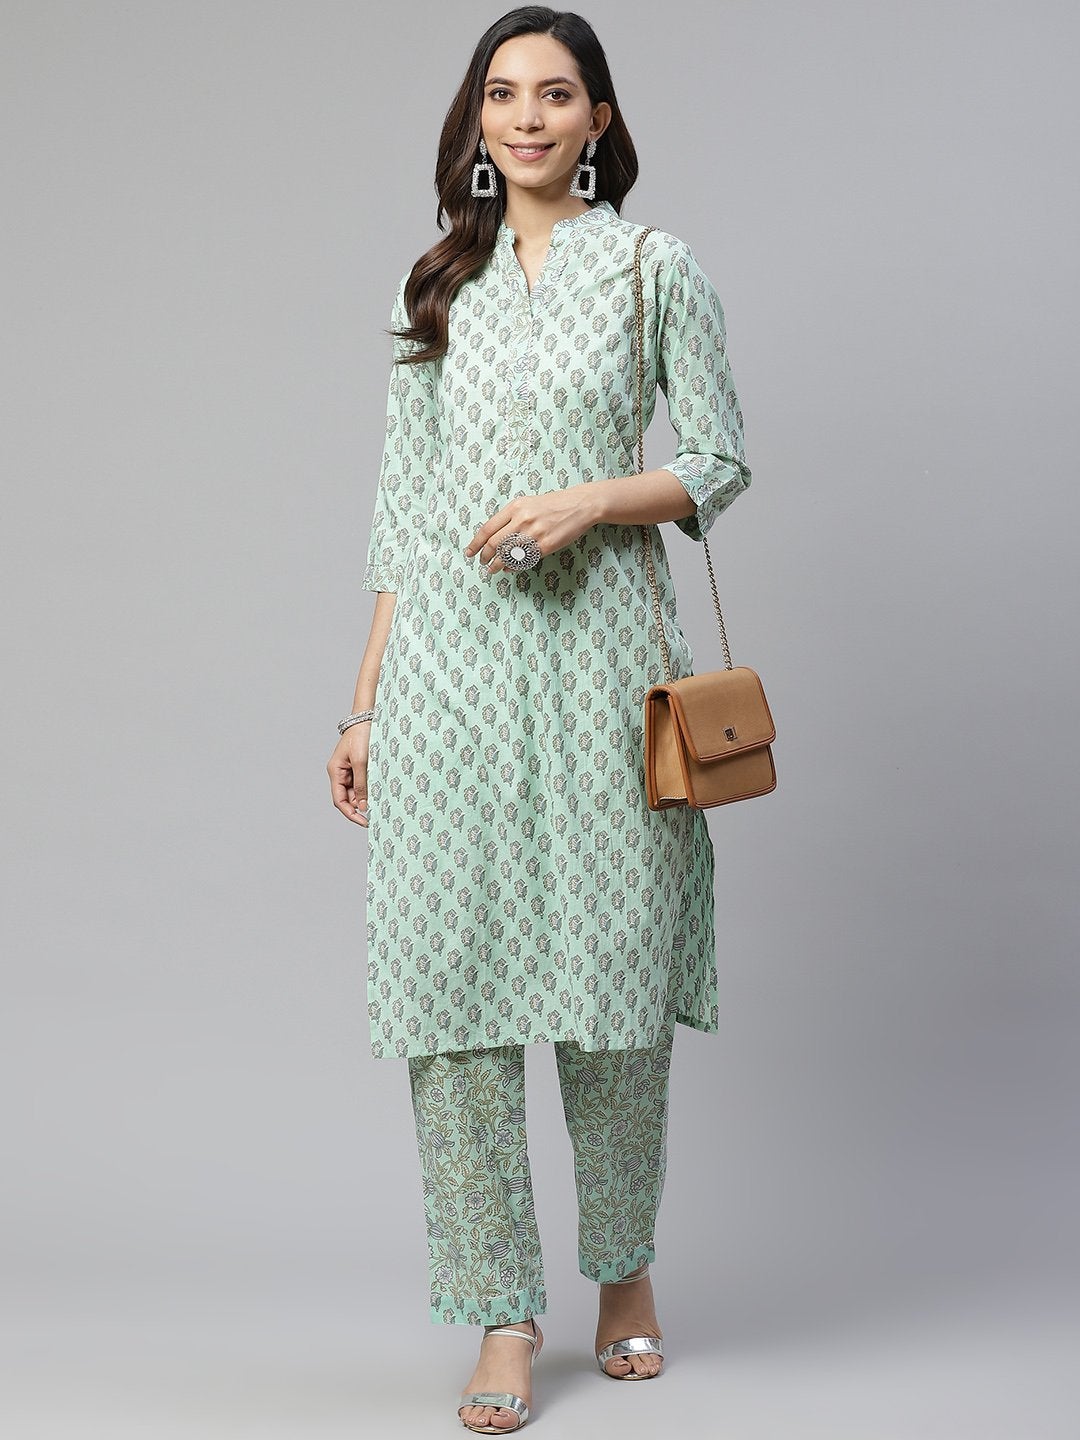 Women's Sea Green Cotton Printed Kurti Pant Set - Divena